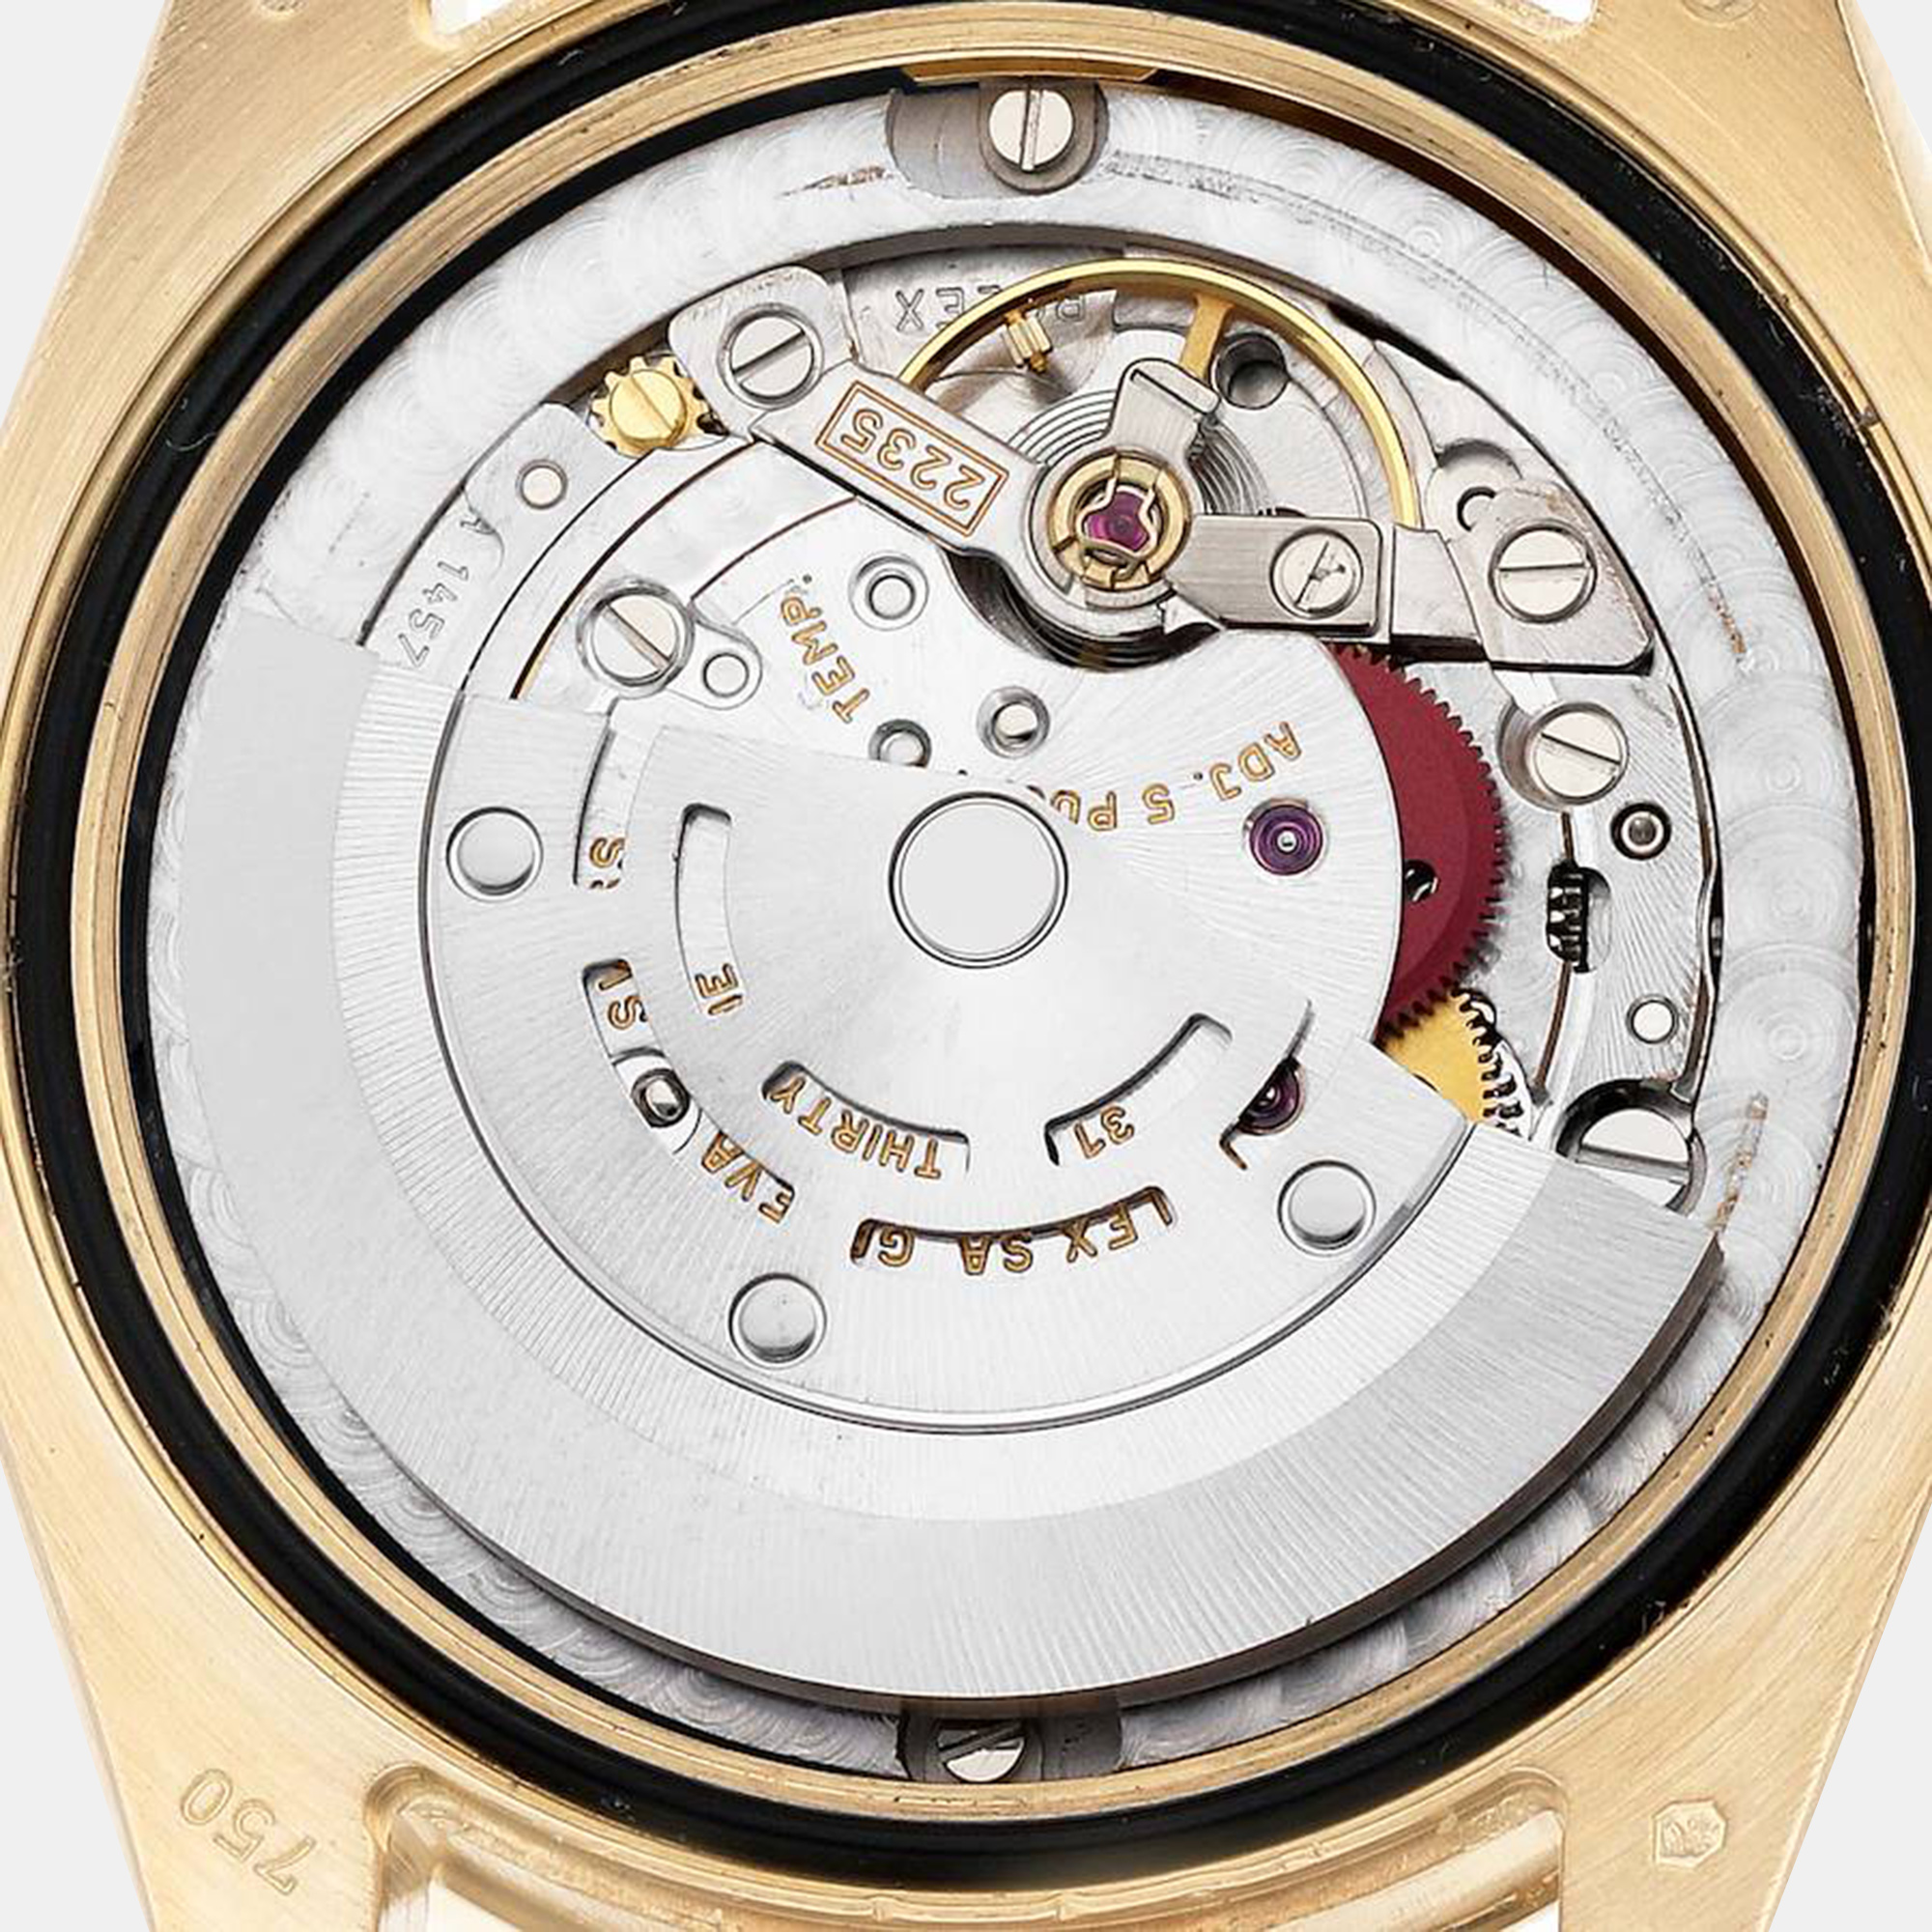 Rolex Datejust President Midsize Yellow Gold Diamond Dial Ladies Watch 178278 31 Mm